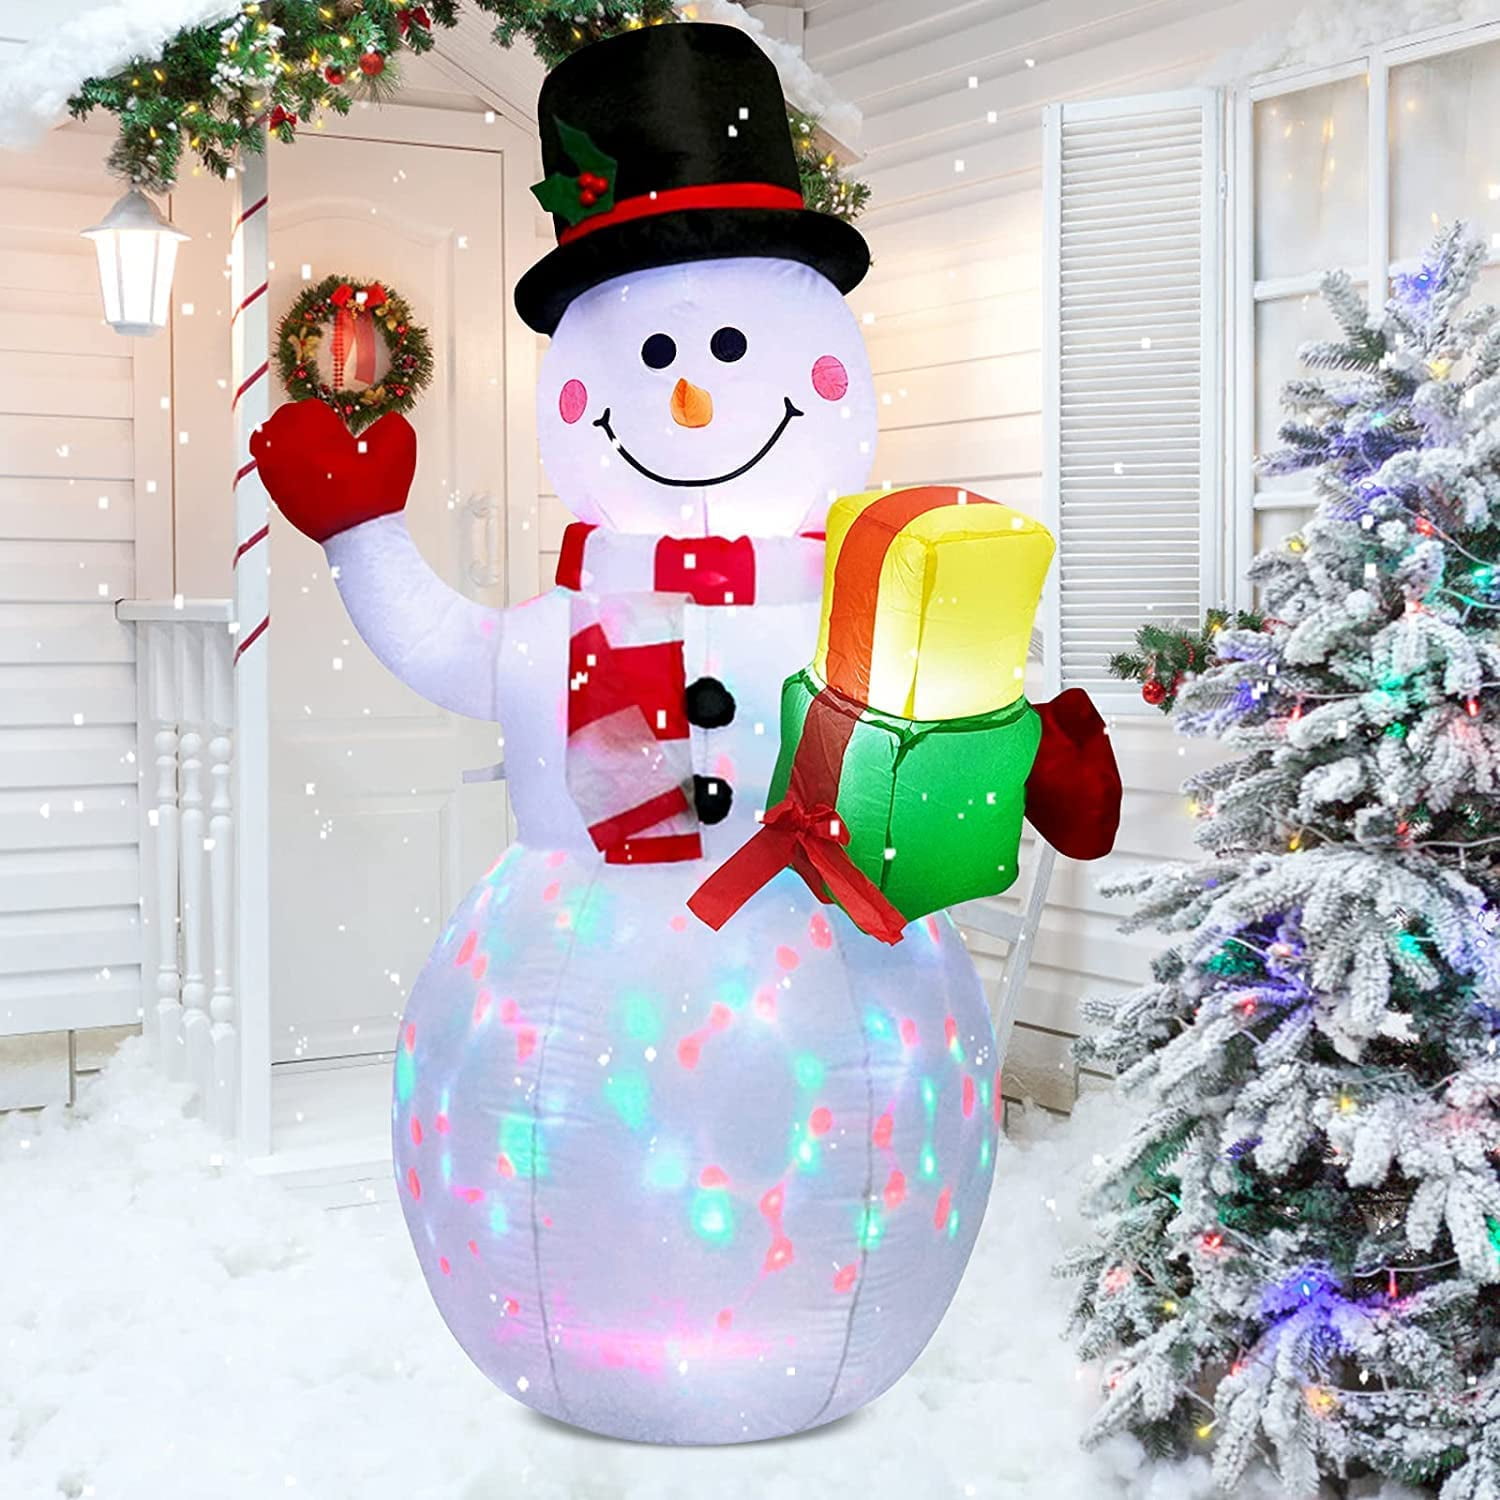 Singing Snowman Family Christmas Tree Decoration w/ LED Lights Decor 5.5" FT 